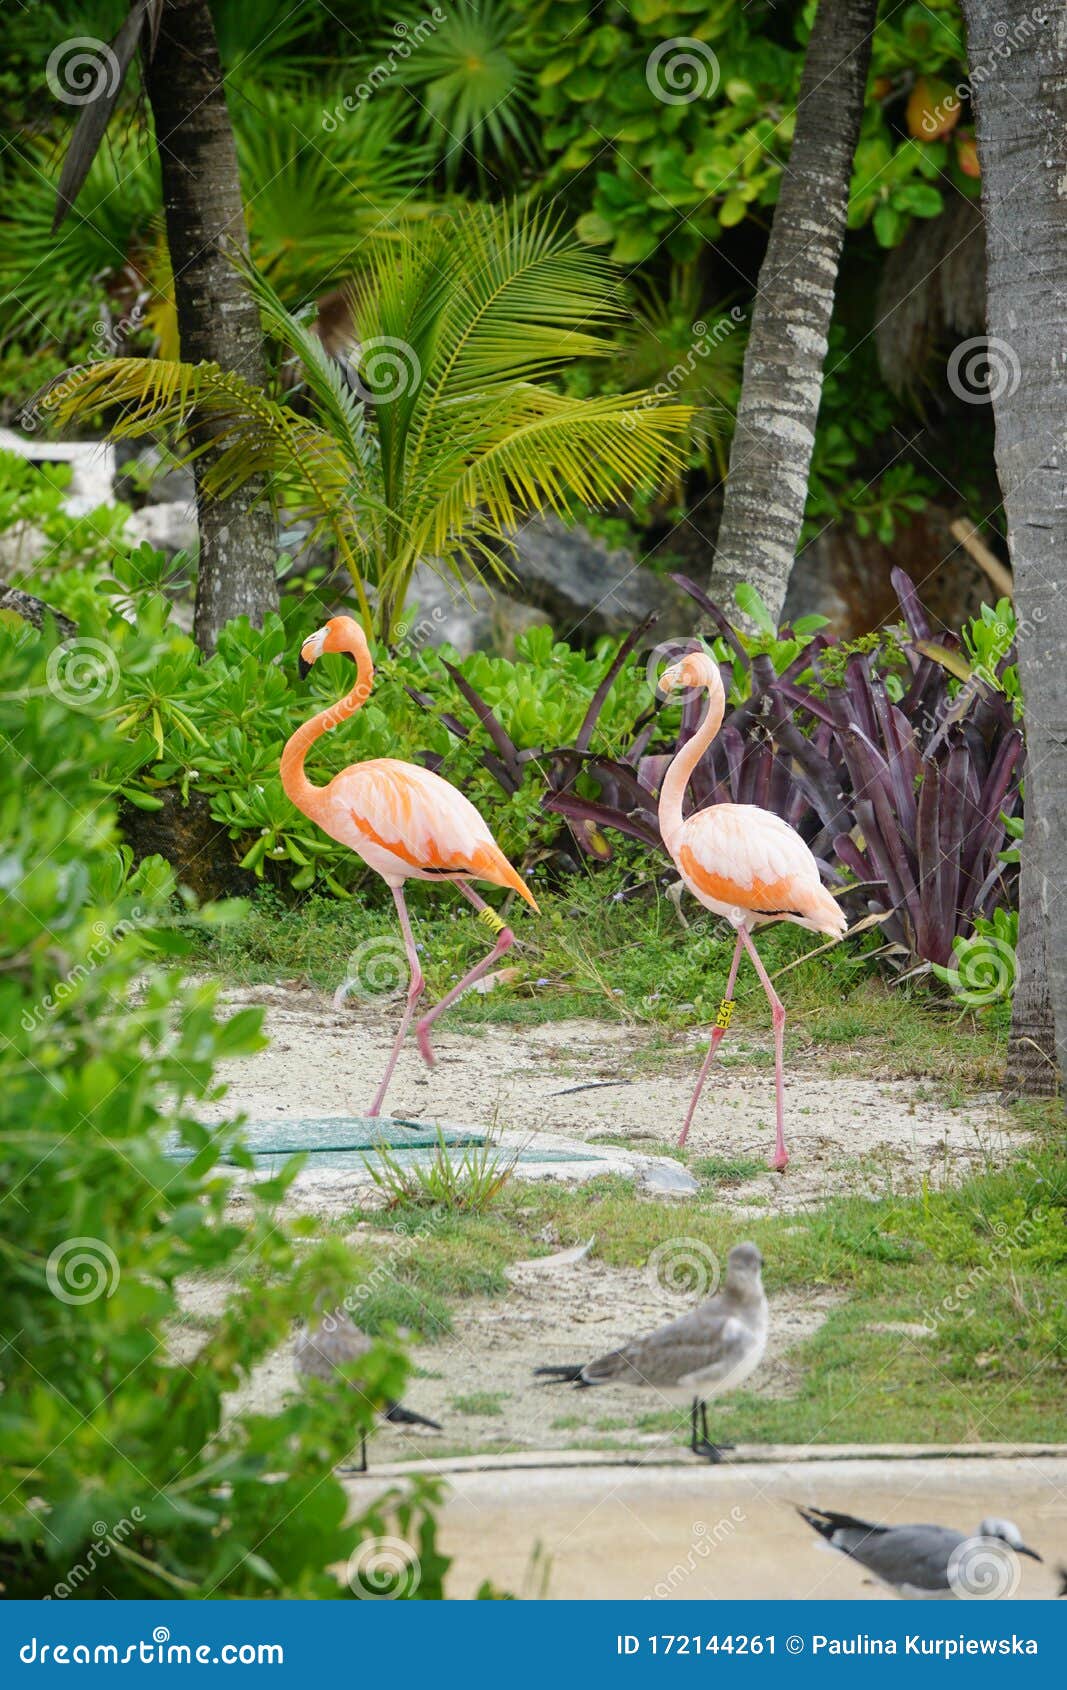 flamingoes in yucatan peninsula, mexico